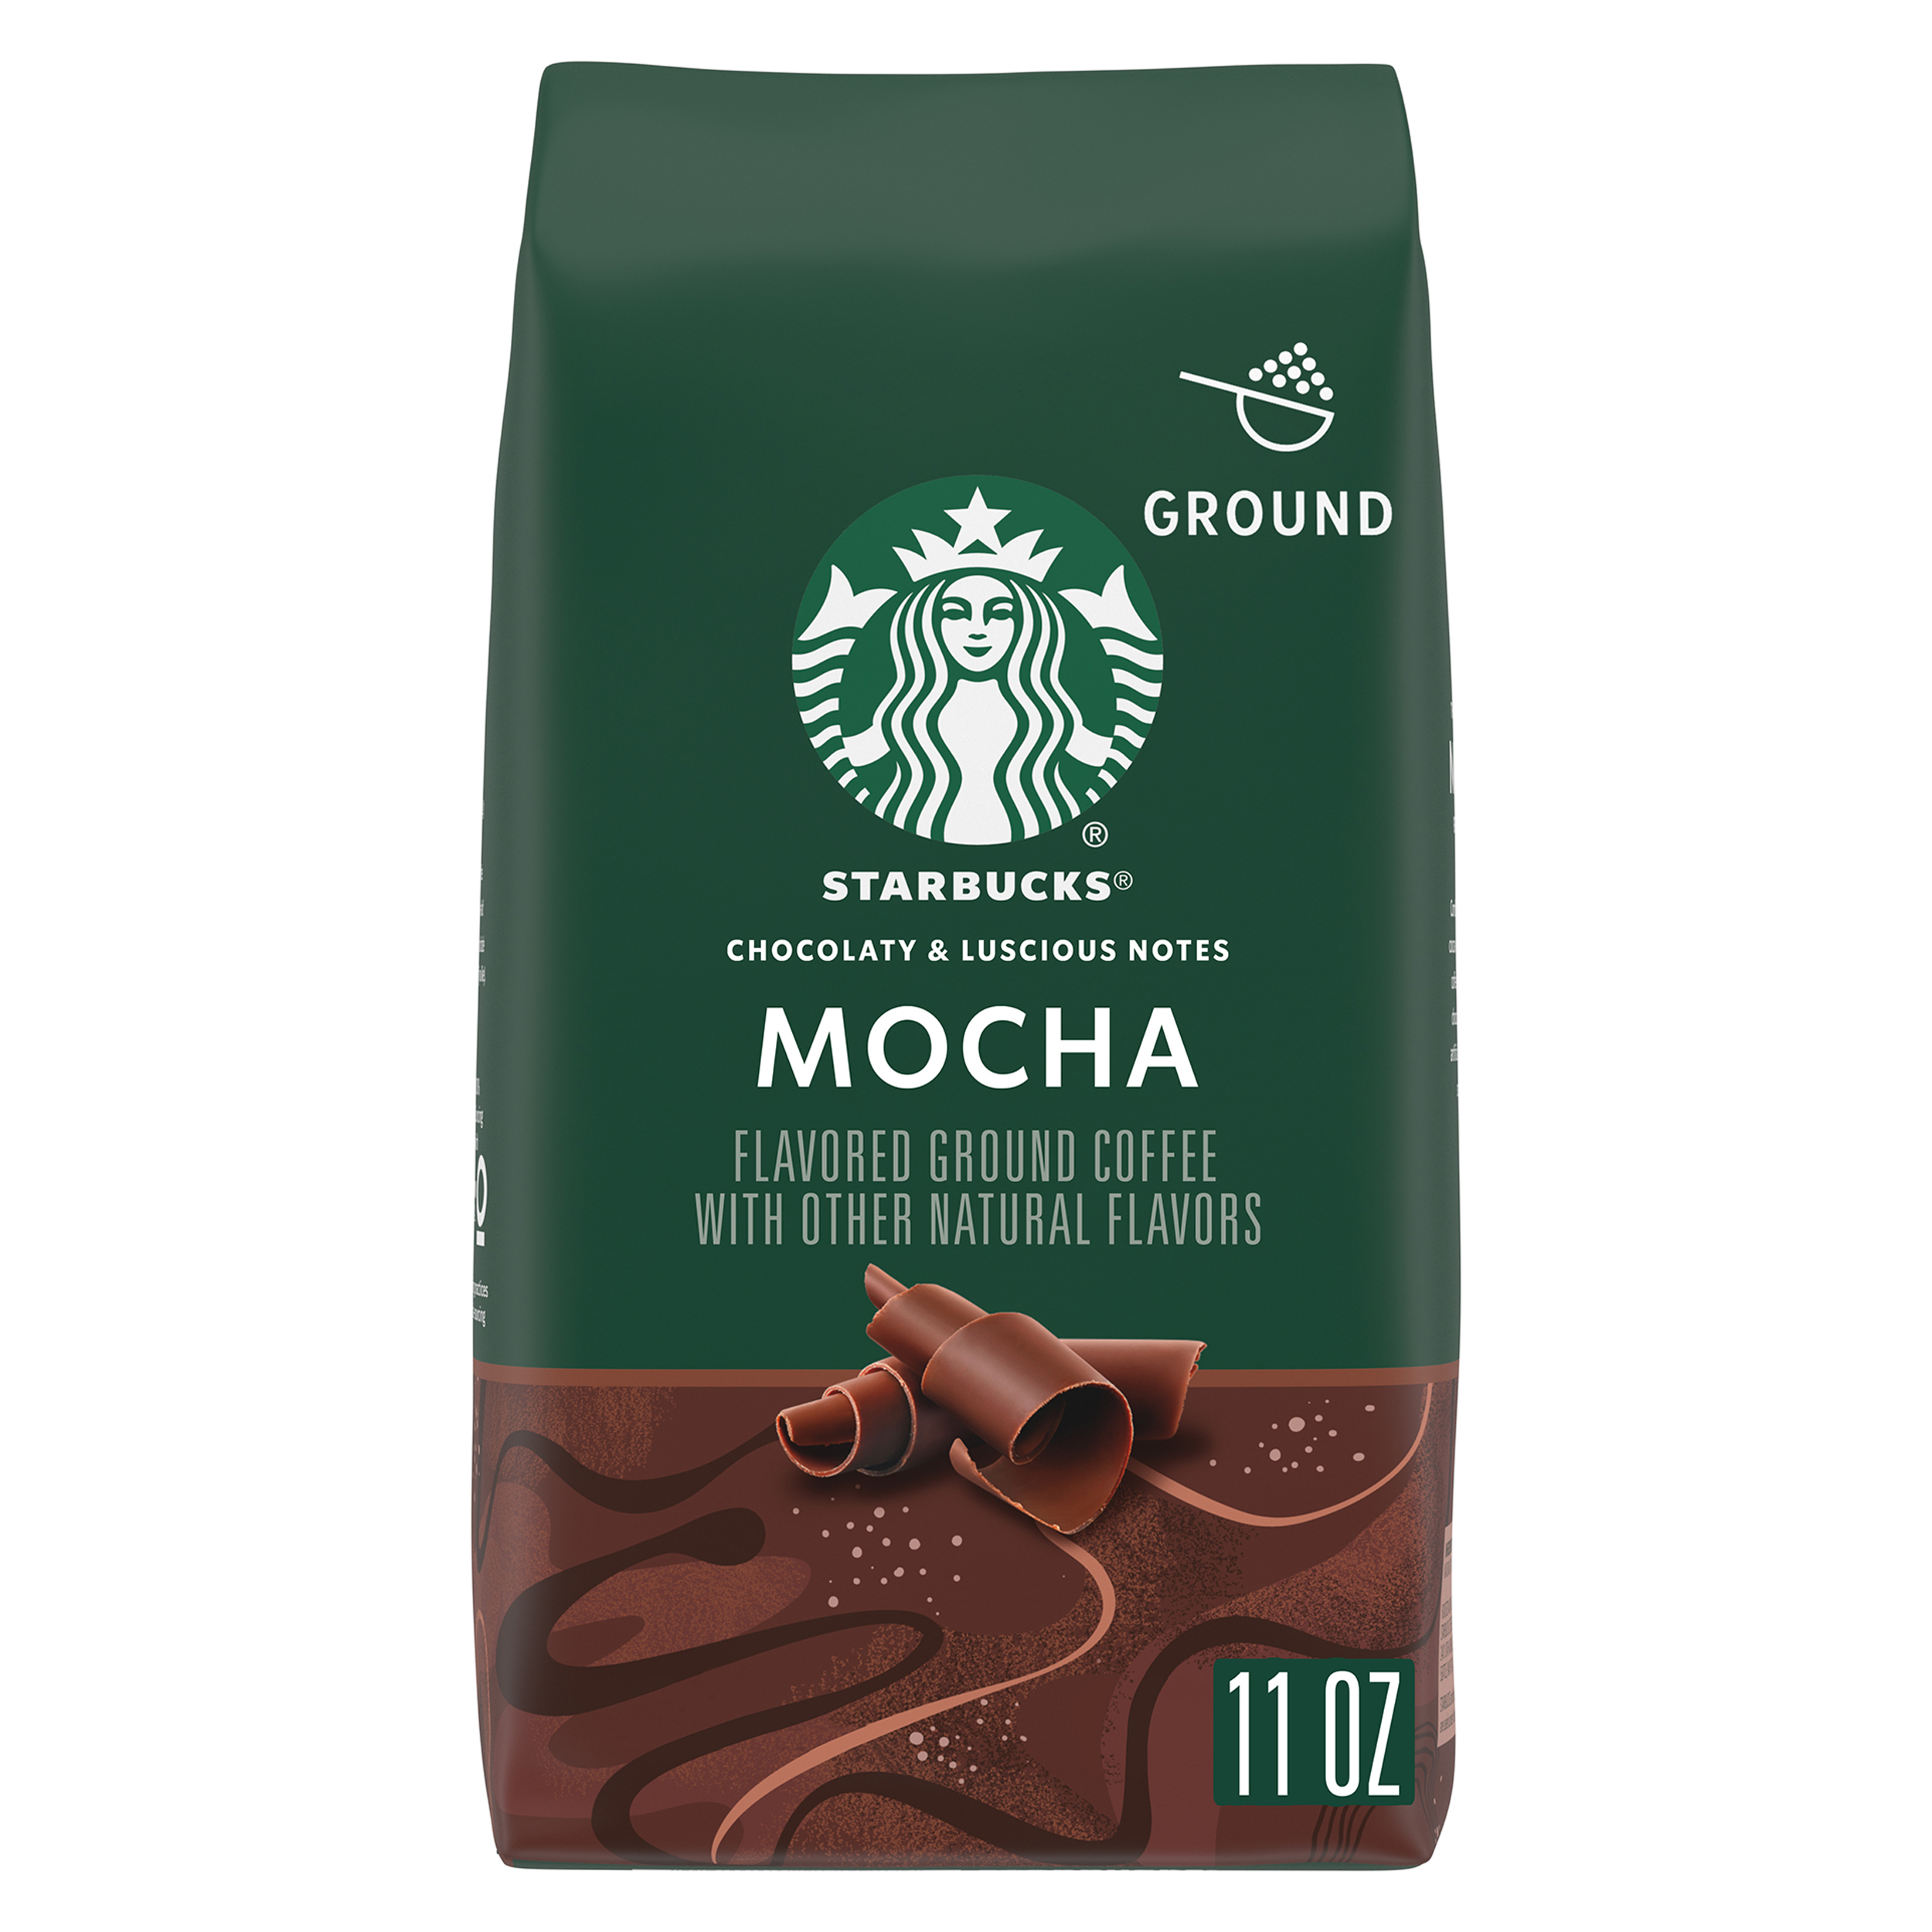 Starbucks Arabica Beans Mocha, Ground Coffee, 11 oz - image 1 of 8